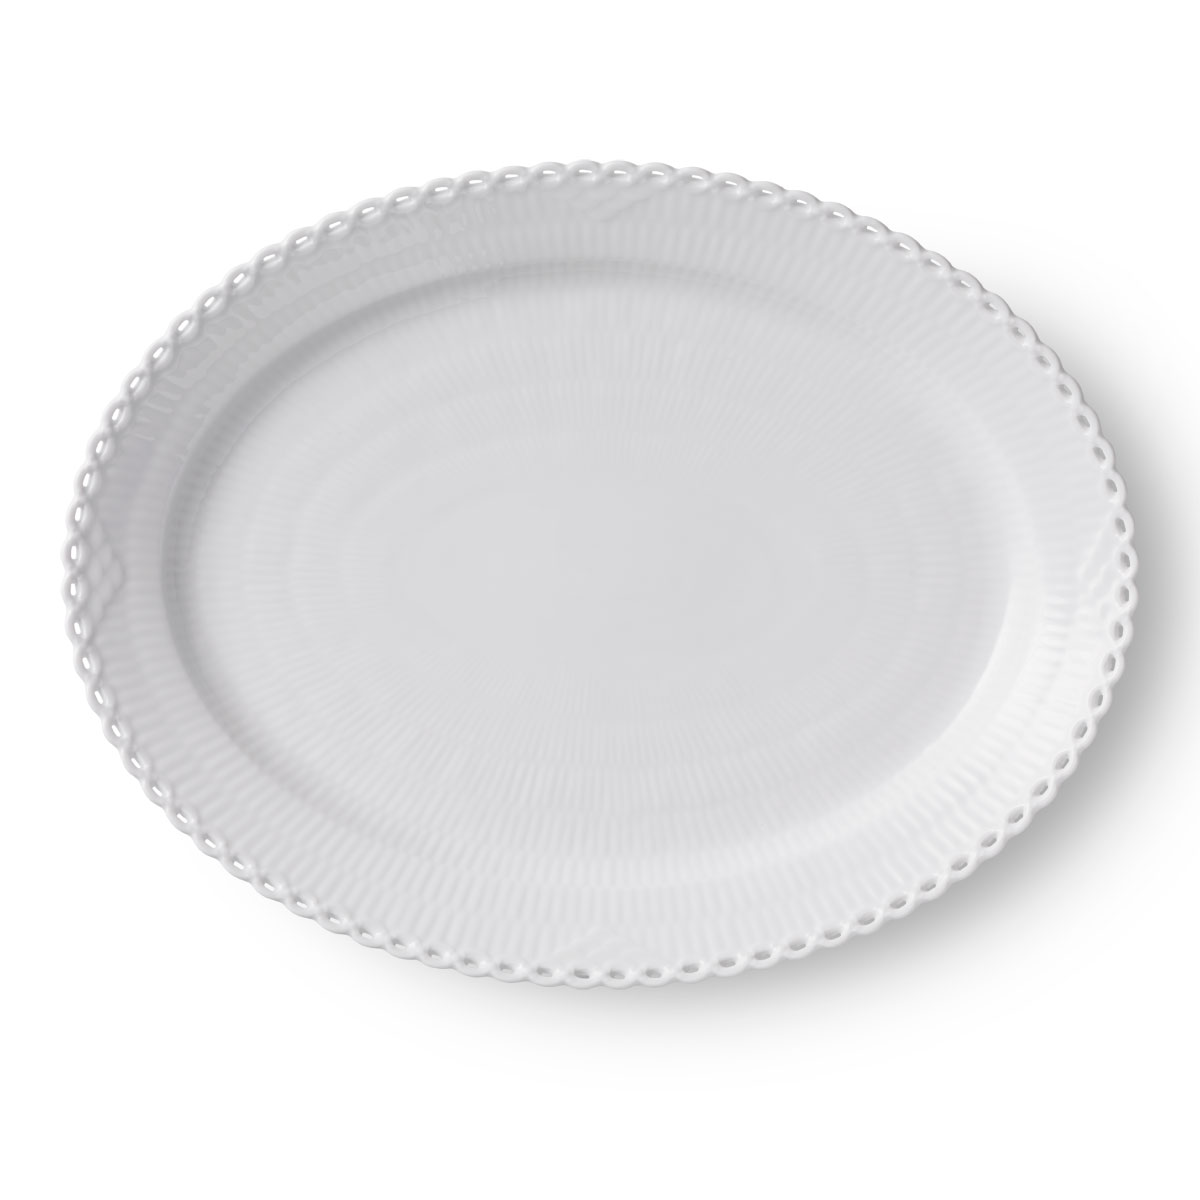 Royal Copenhagen White Fluted Full Lace Oval Platter Large 14.25"